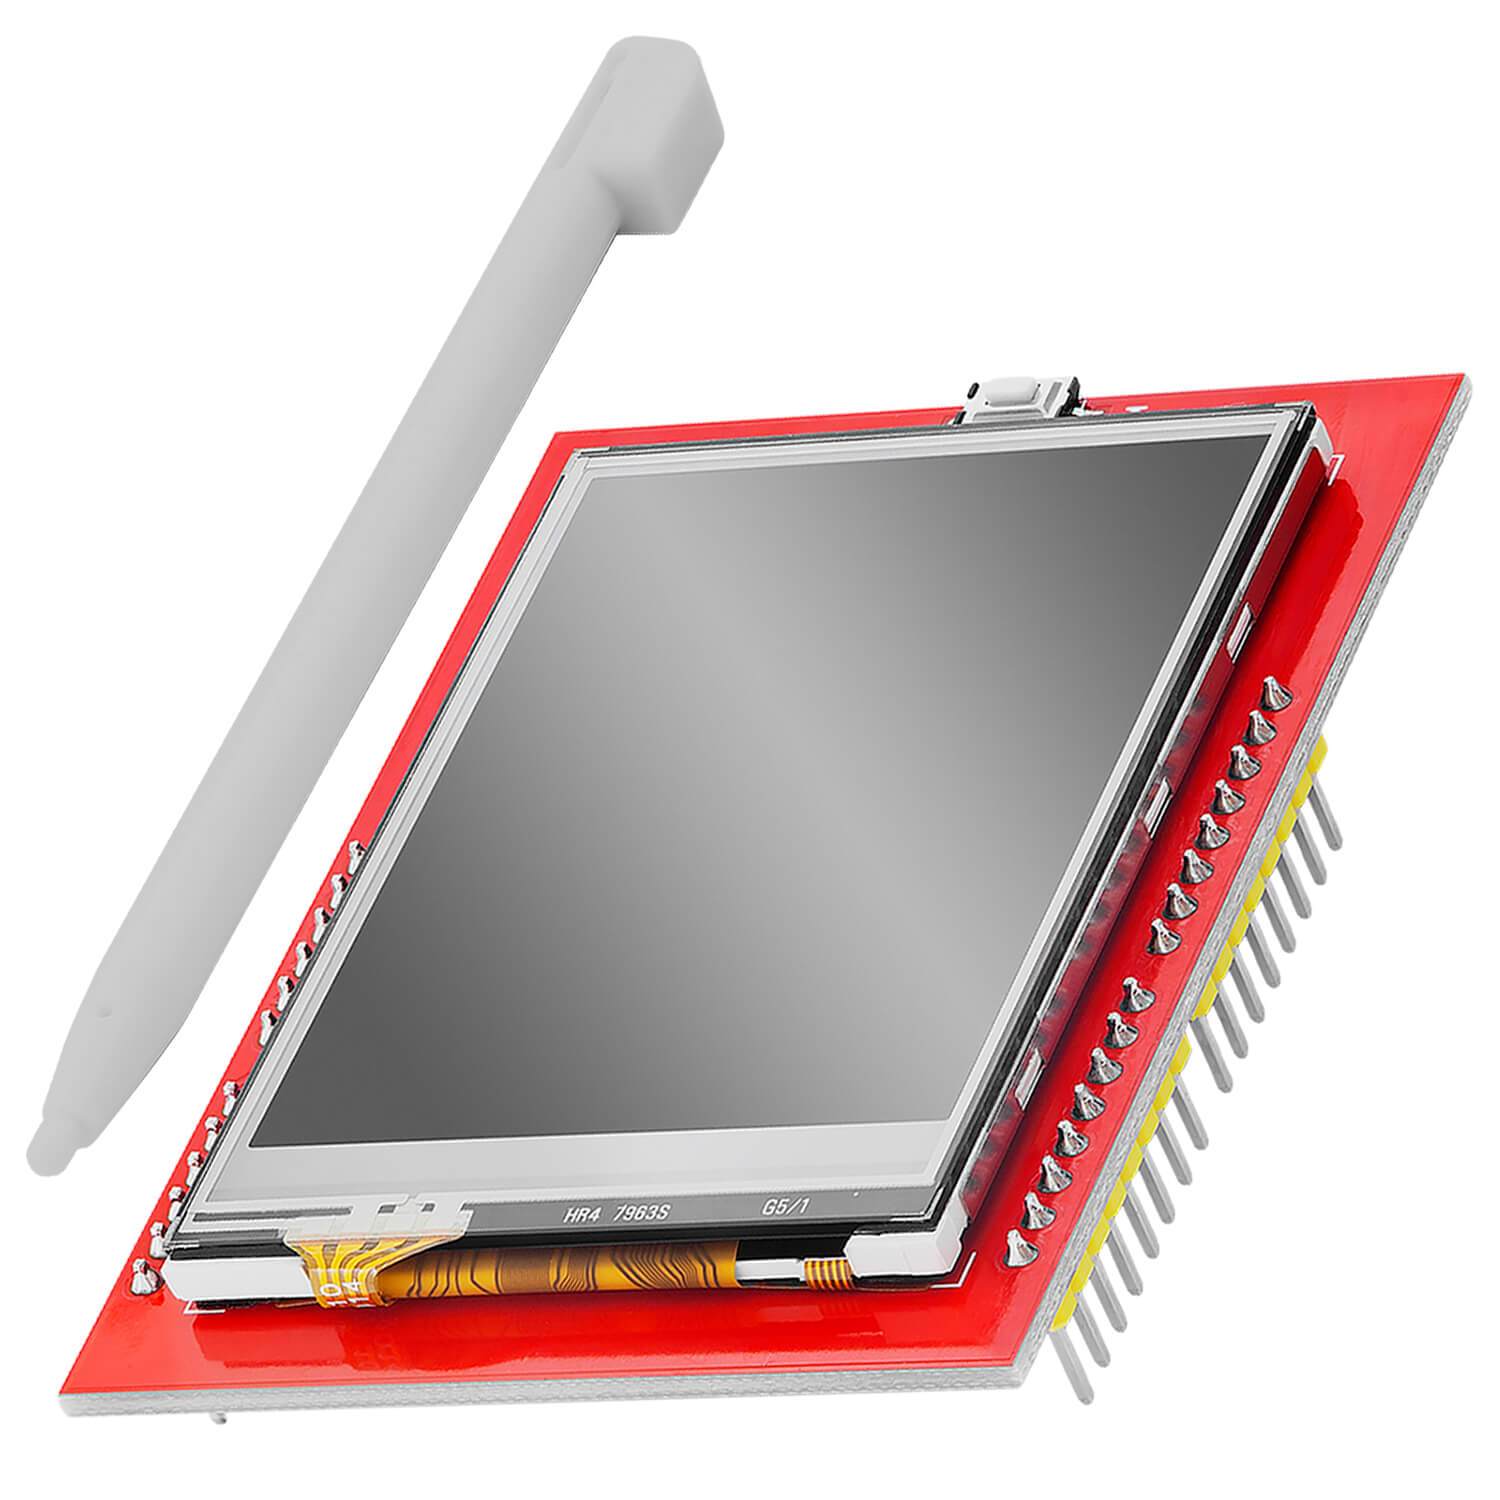 Mikrocontroller AZ-ATmega328-Board mit Touch Display Shield 2,4" TFT LCD - AZ-Delivery